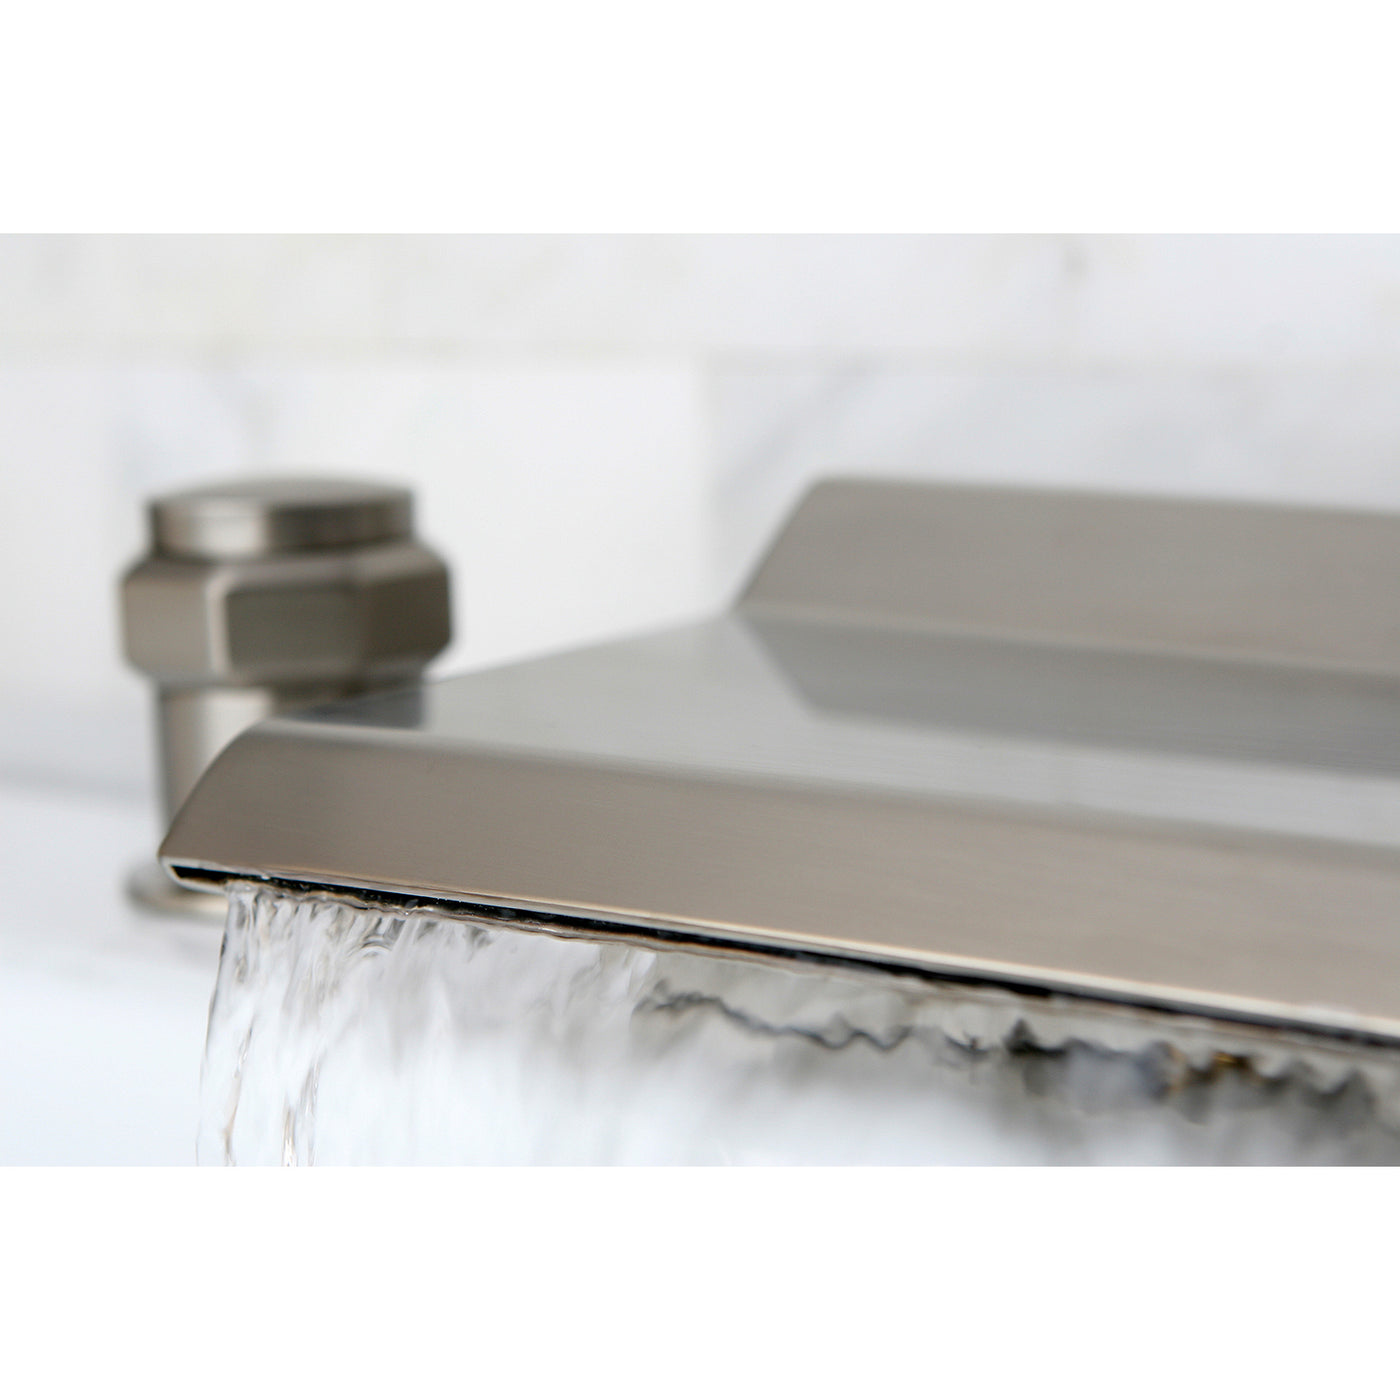 Elements of Design ES2248MR Roman Tub Faucet, Brushed Nickel